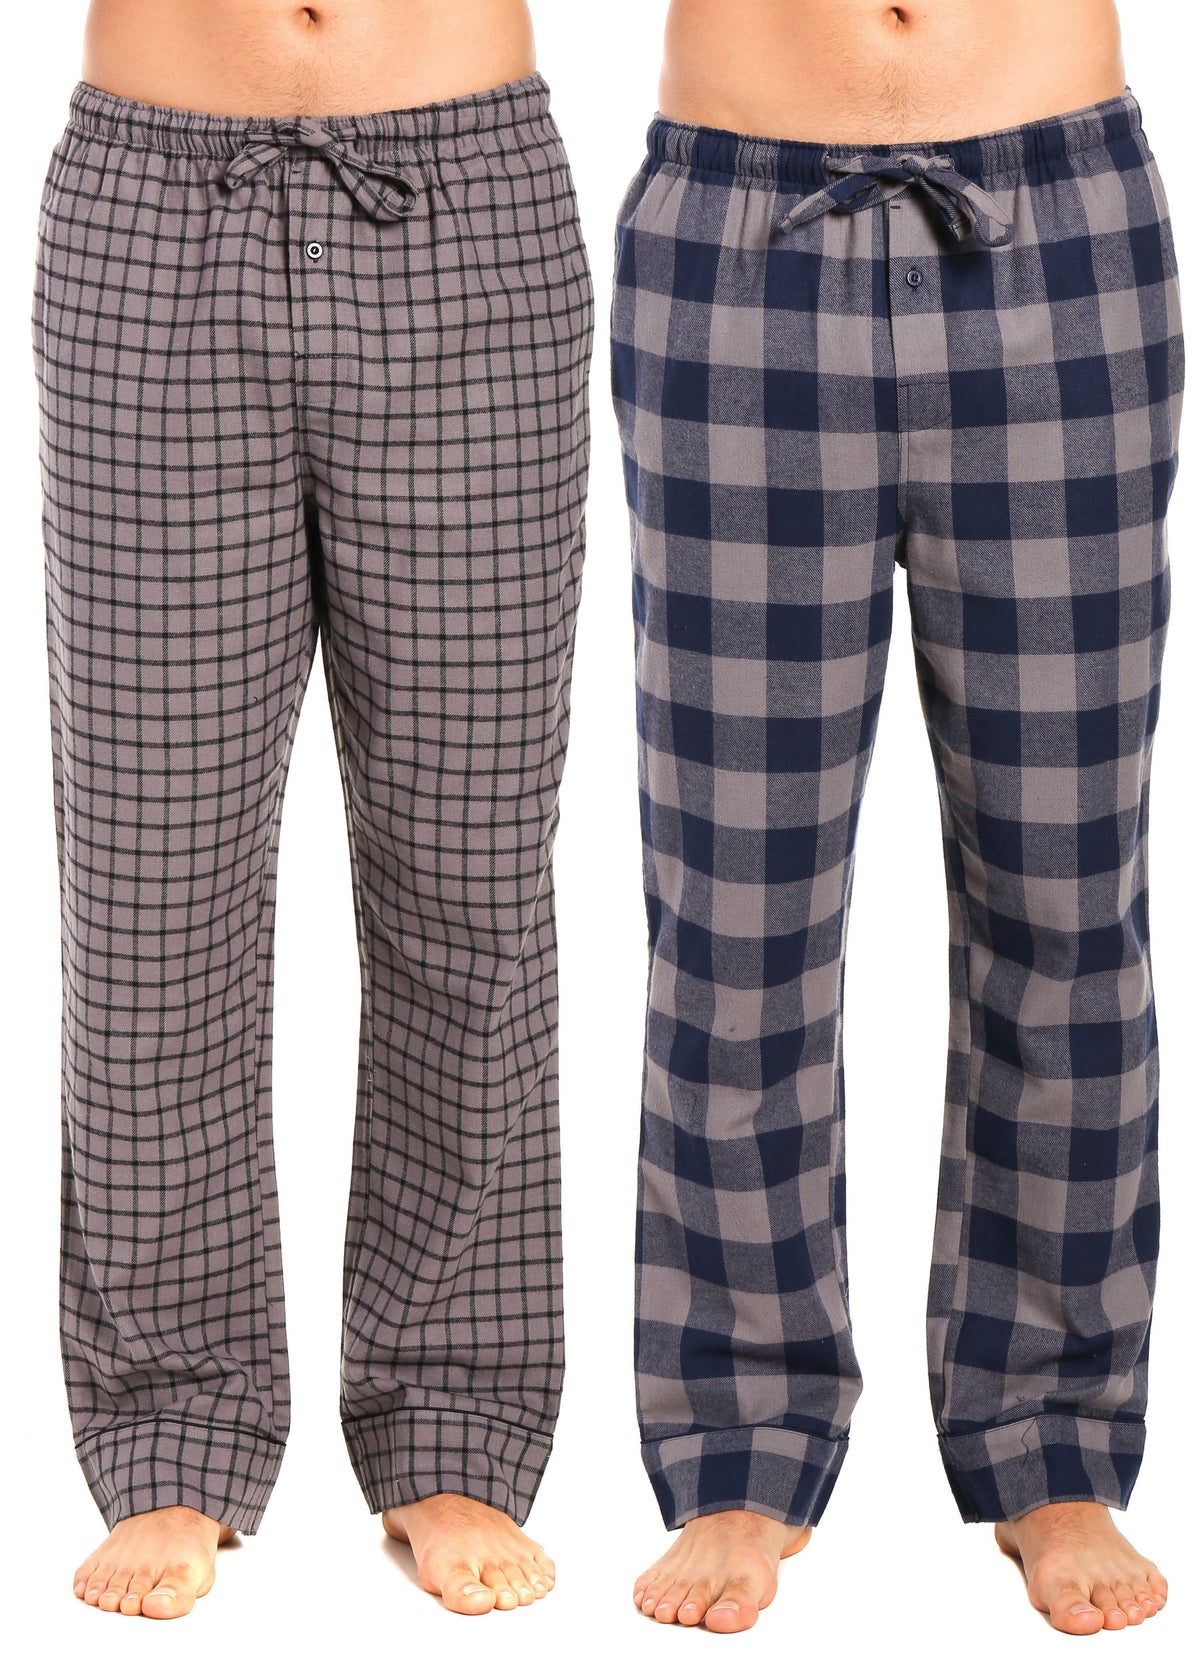 2-Pack Men's 100% Cotton Flannel Lounge Pants (Checks Charcoal-Navy-Black)